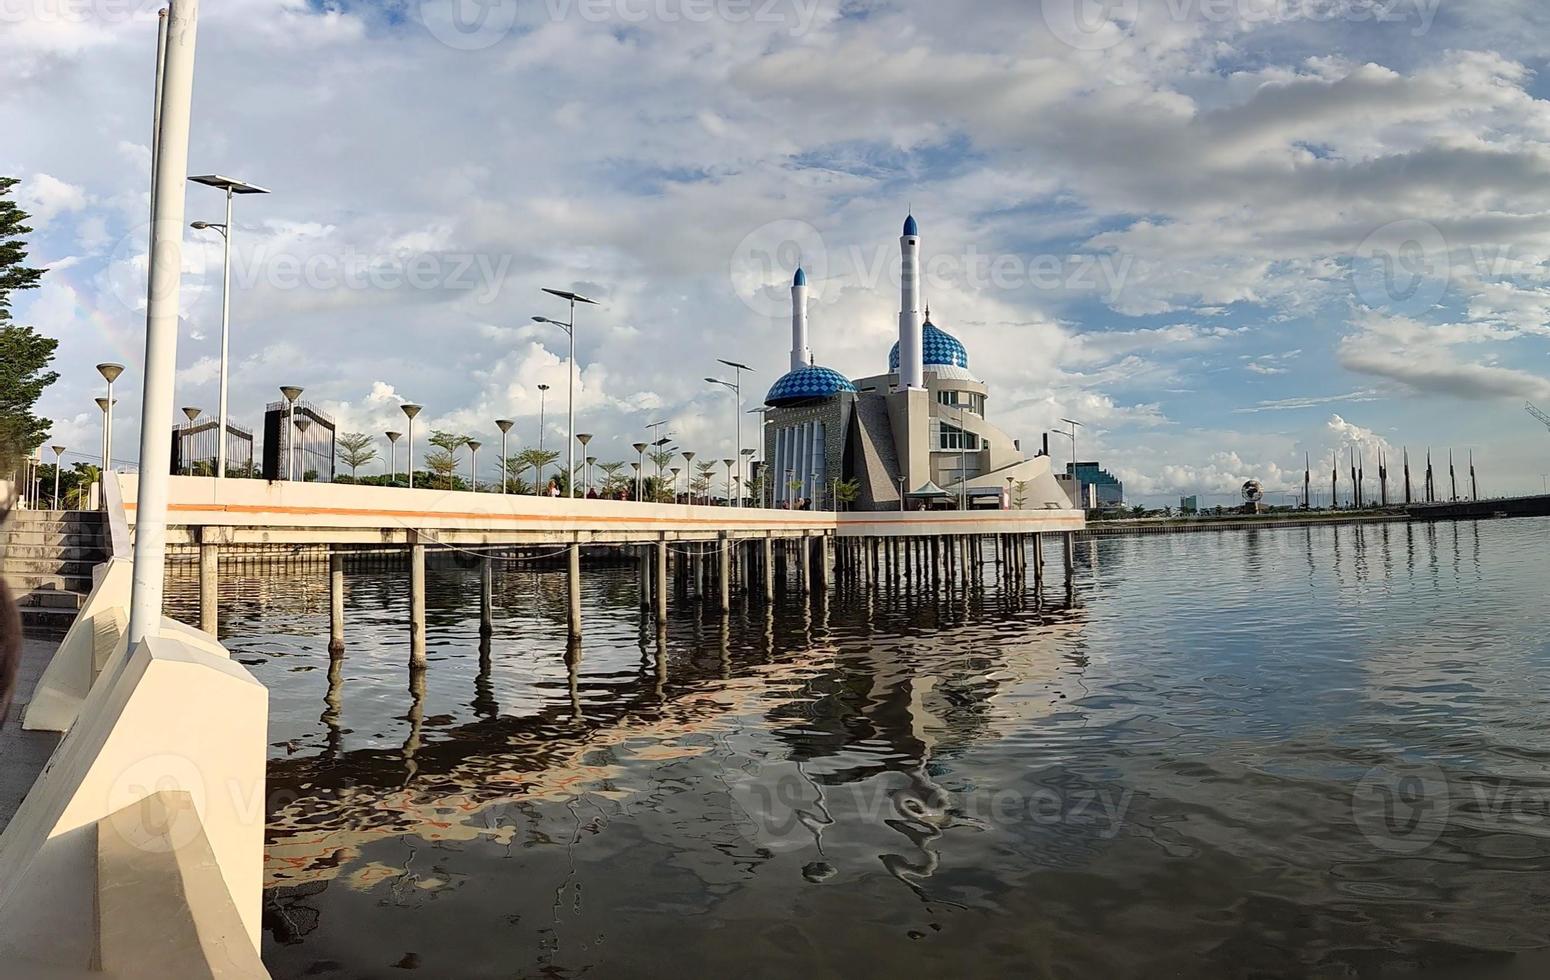 mesquita flutuante makassar, sulawesi, indonésia foto